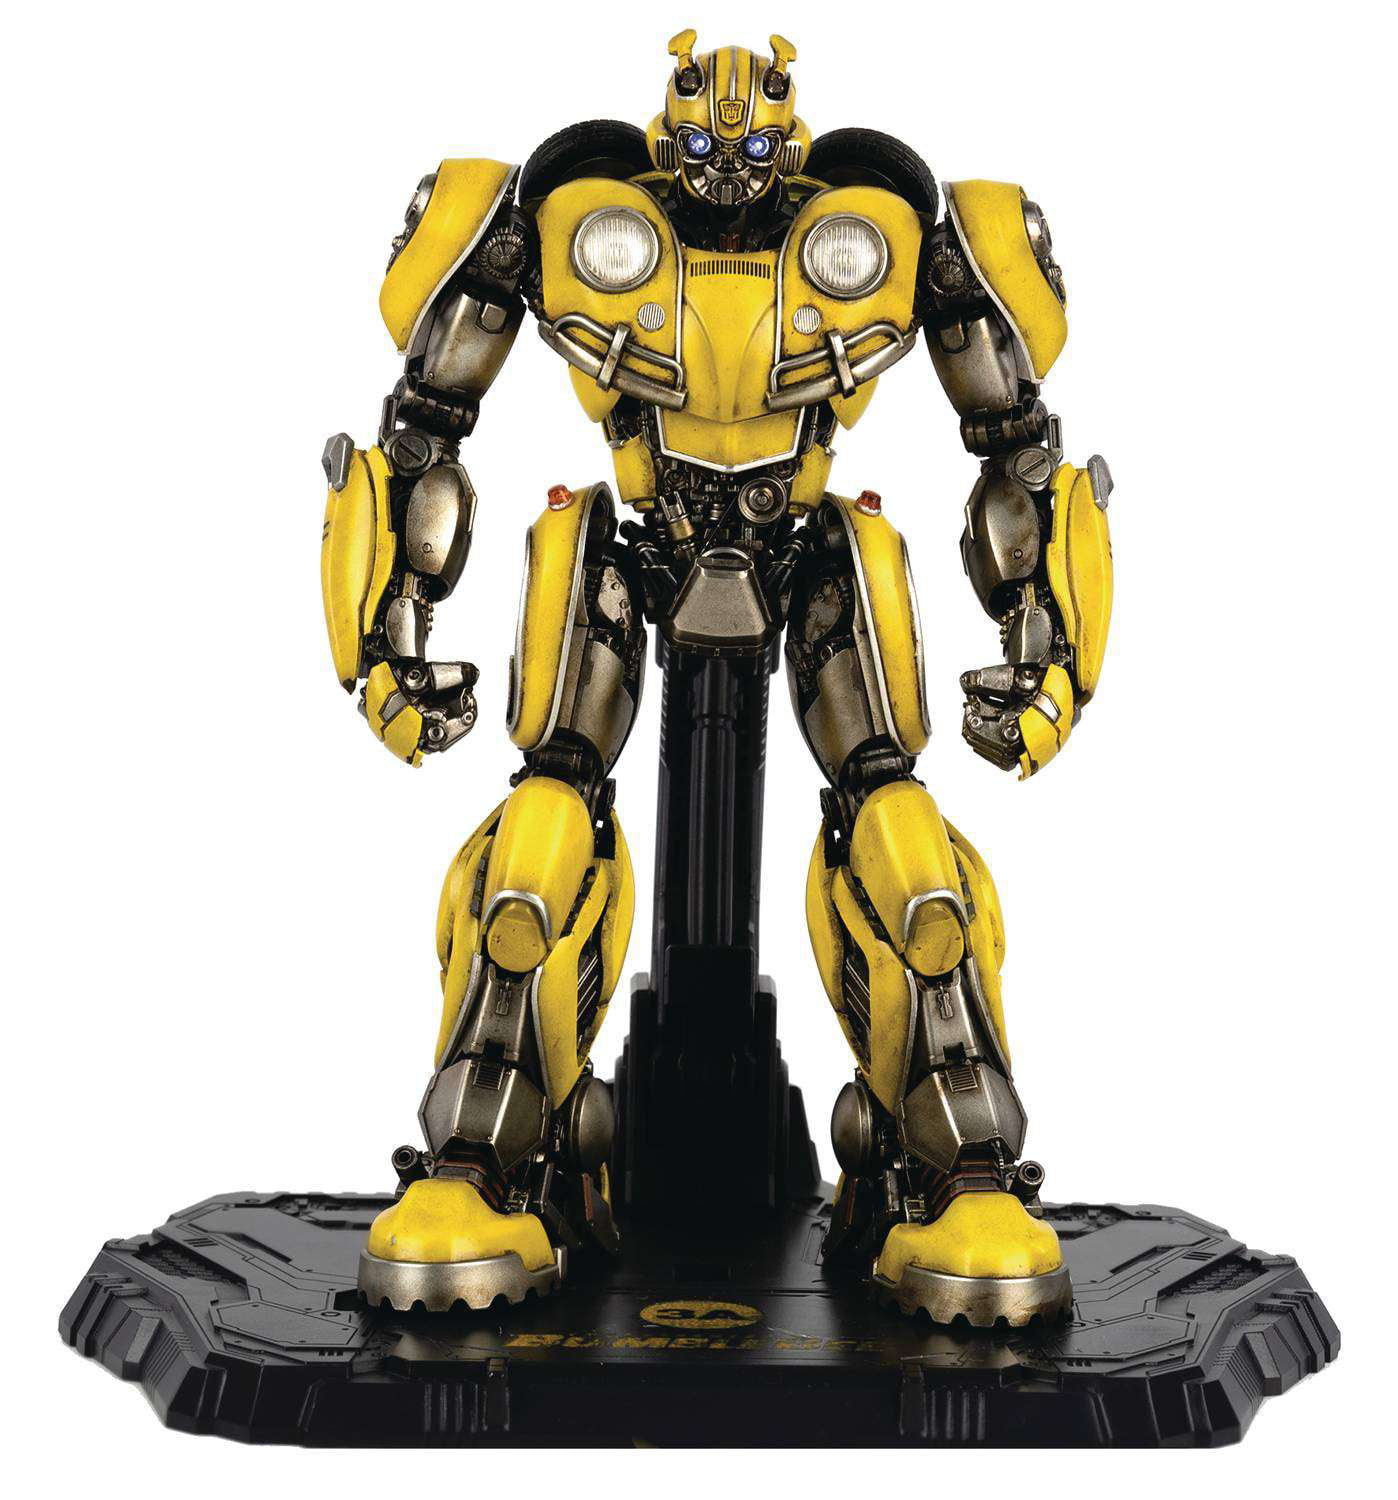 Bumblebee Movie - DLX Optimus Prime Collectible Figure